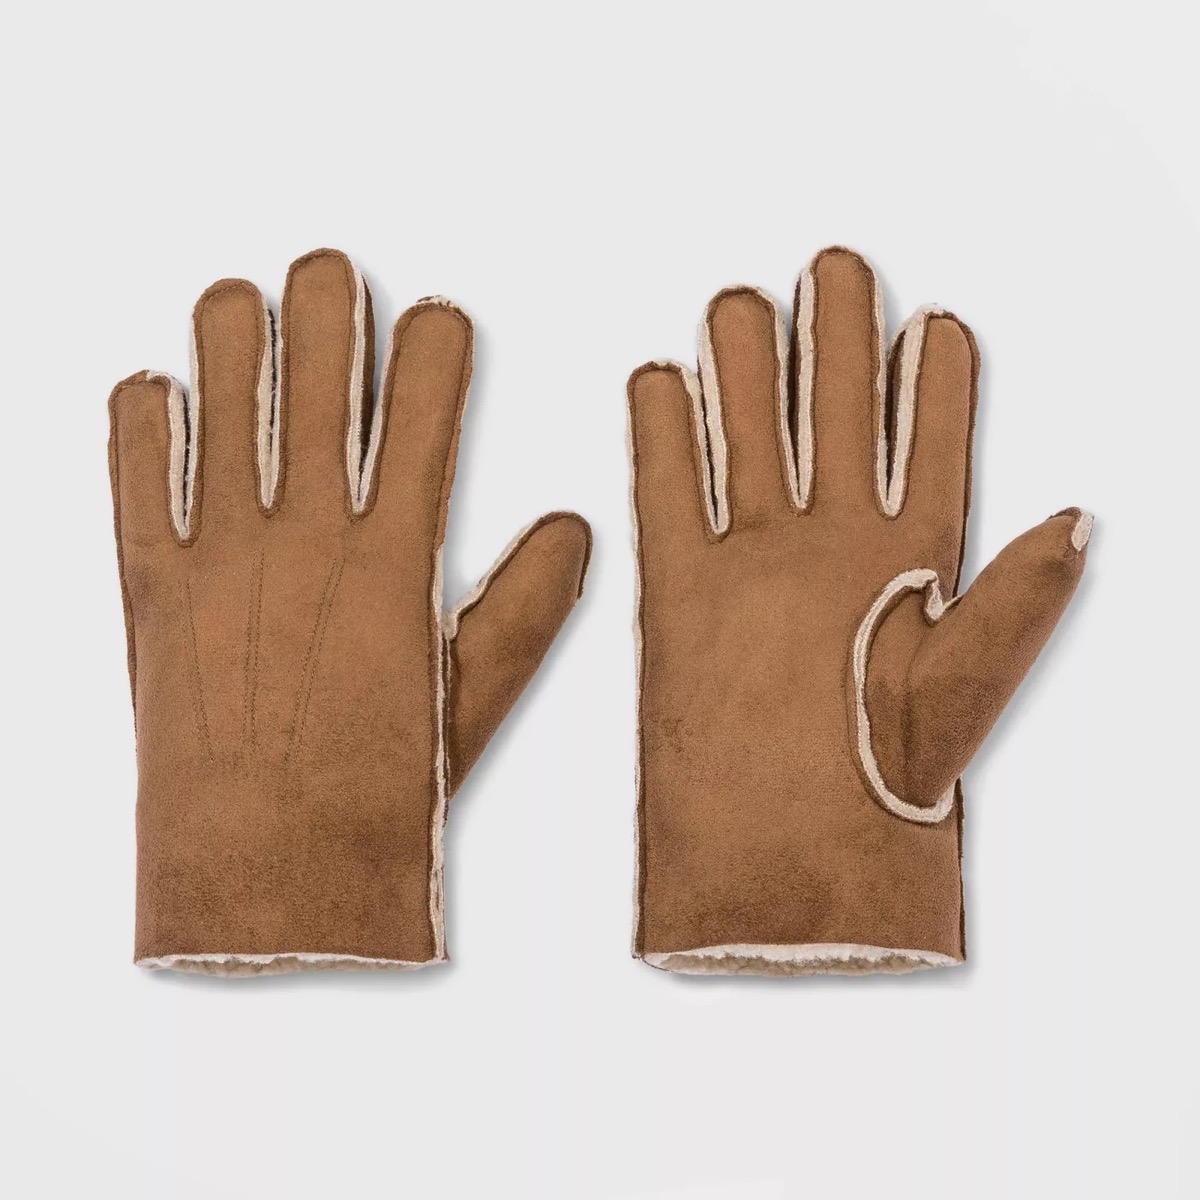 A pair of sheepskin gloves